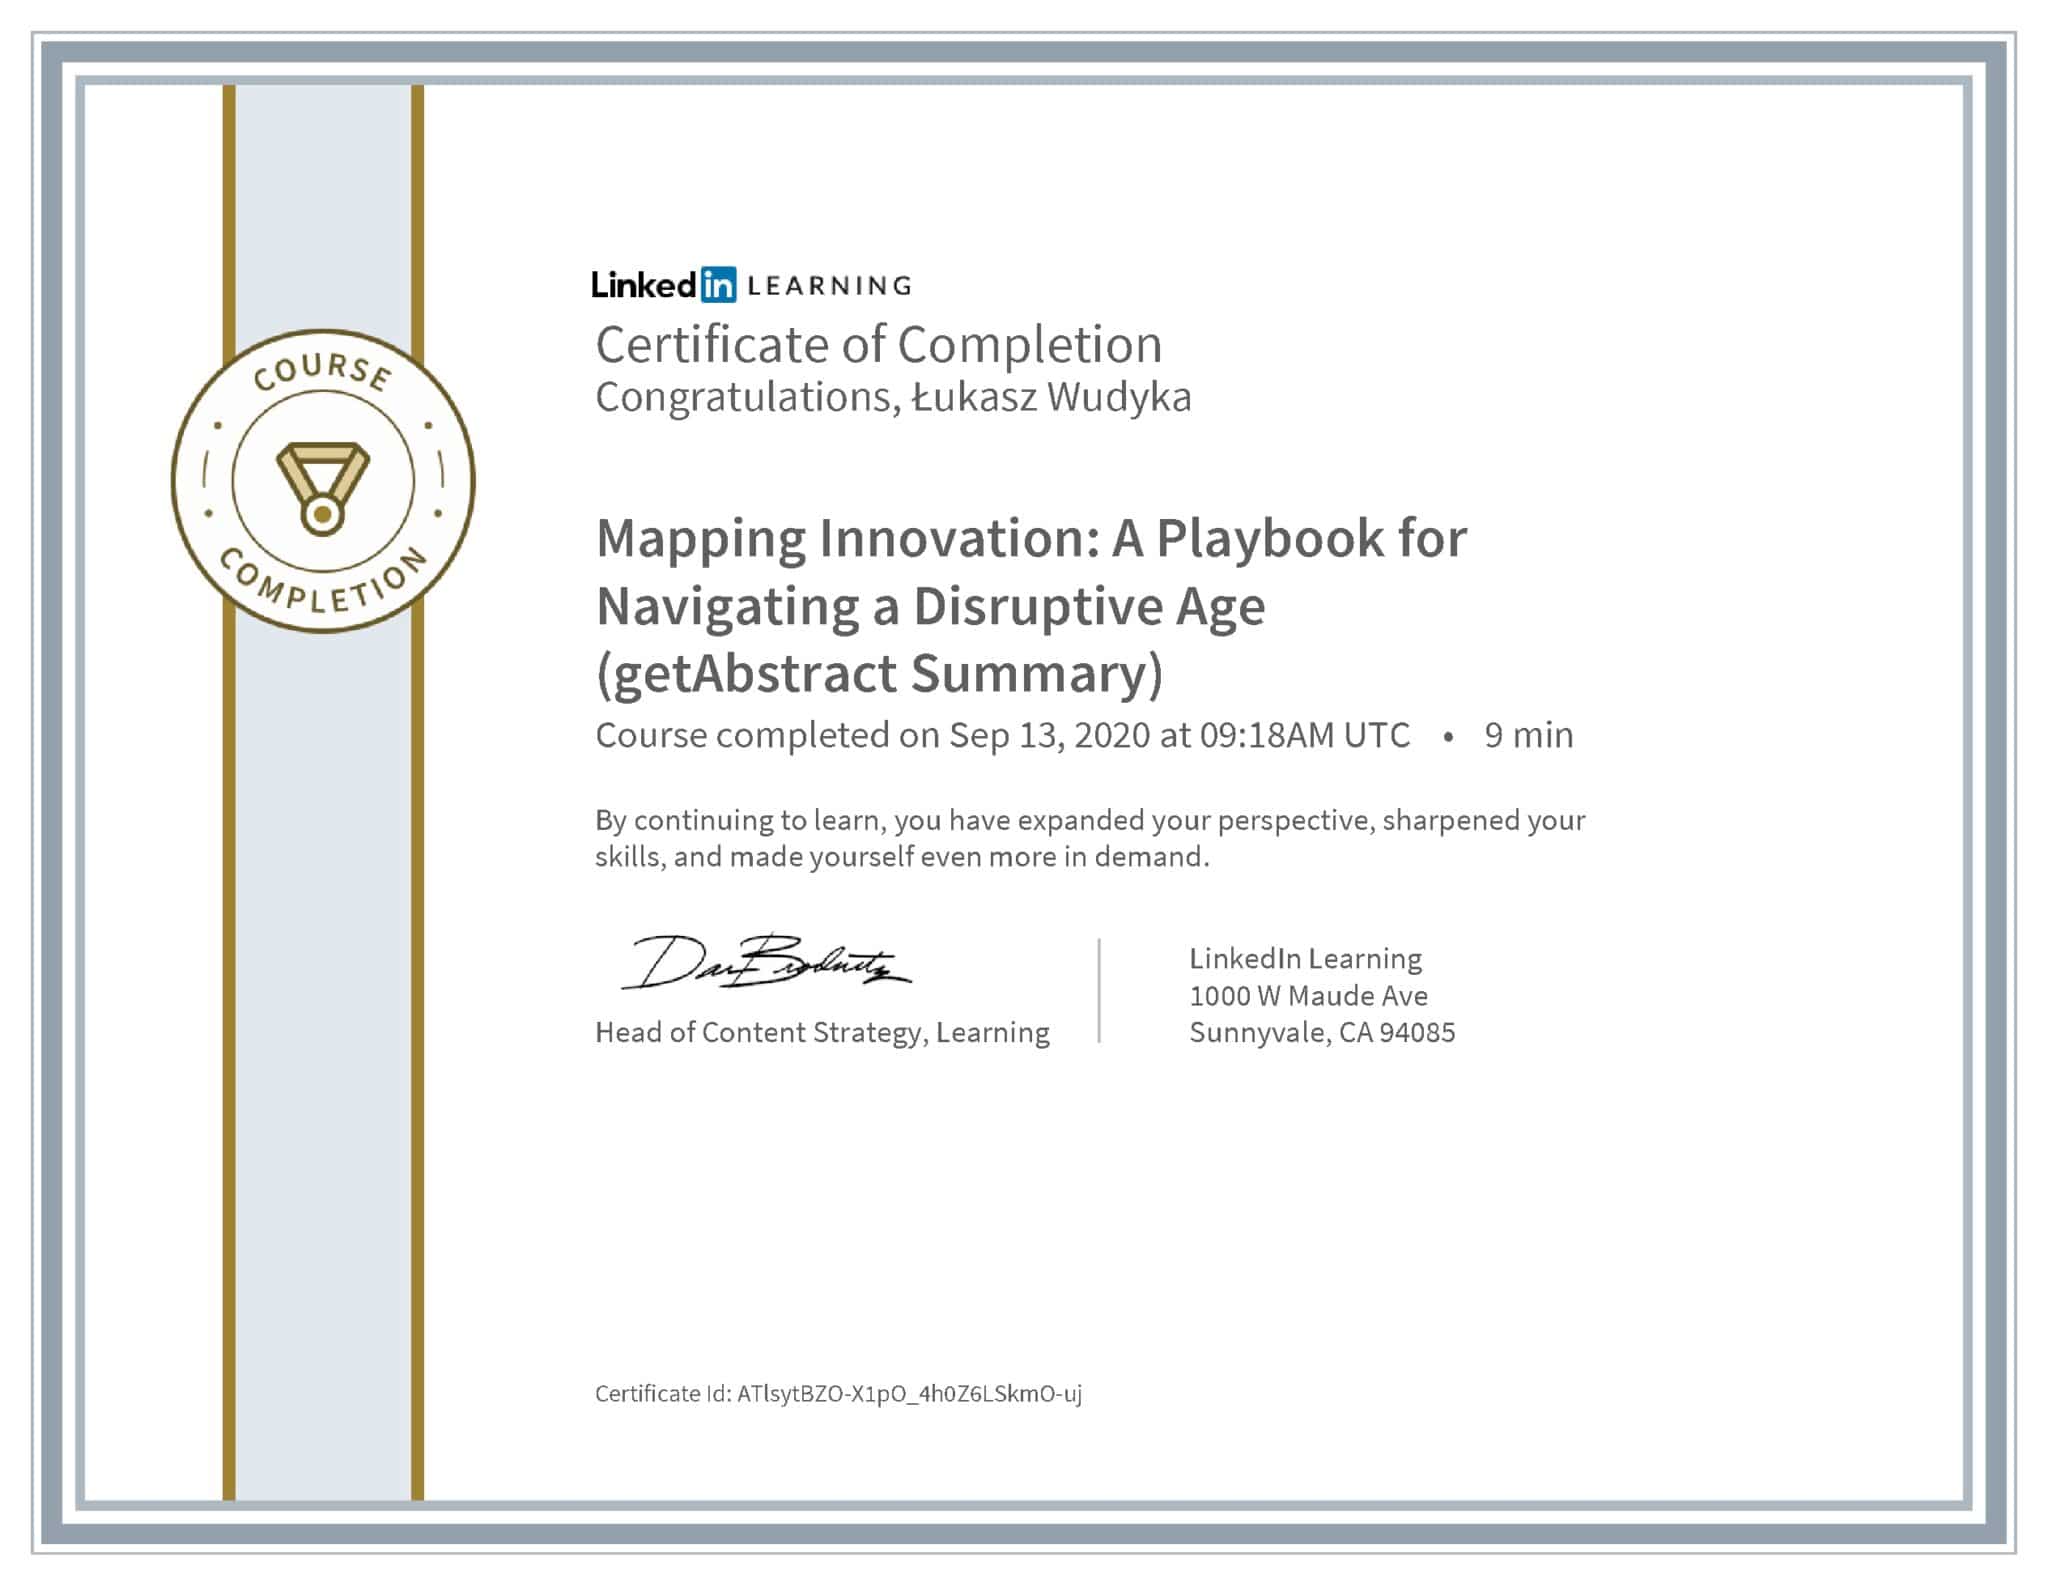 Łukasz Wudyka certyfikat LinkedIn Mapping Innovation: A Playbook for Navigating a Disruptive Age (getAbstract Summary)